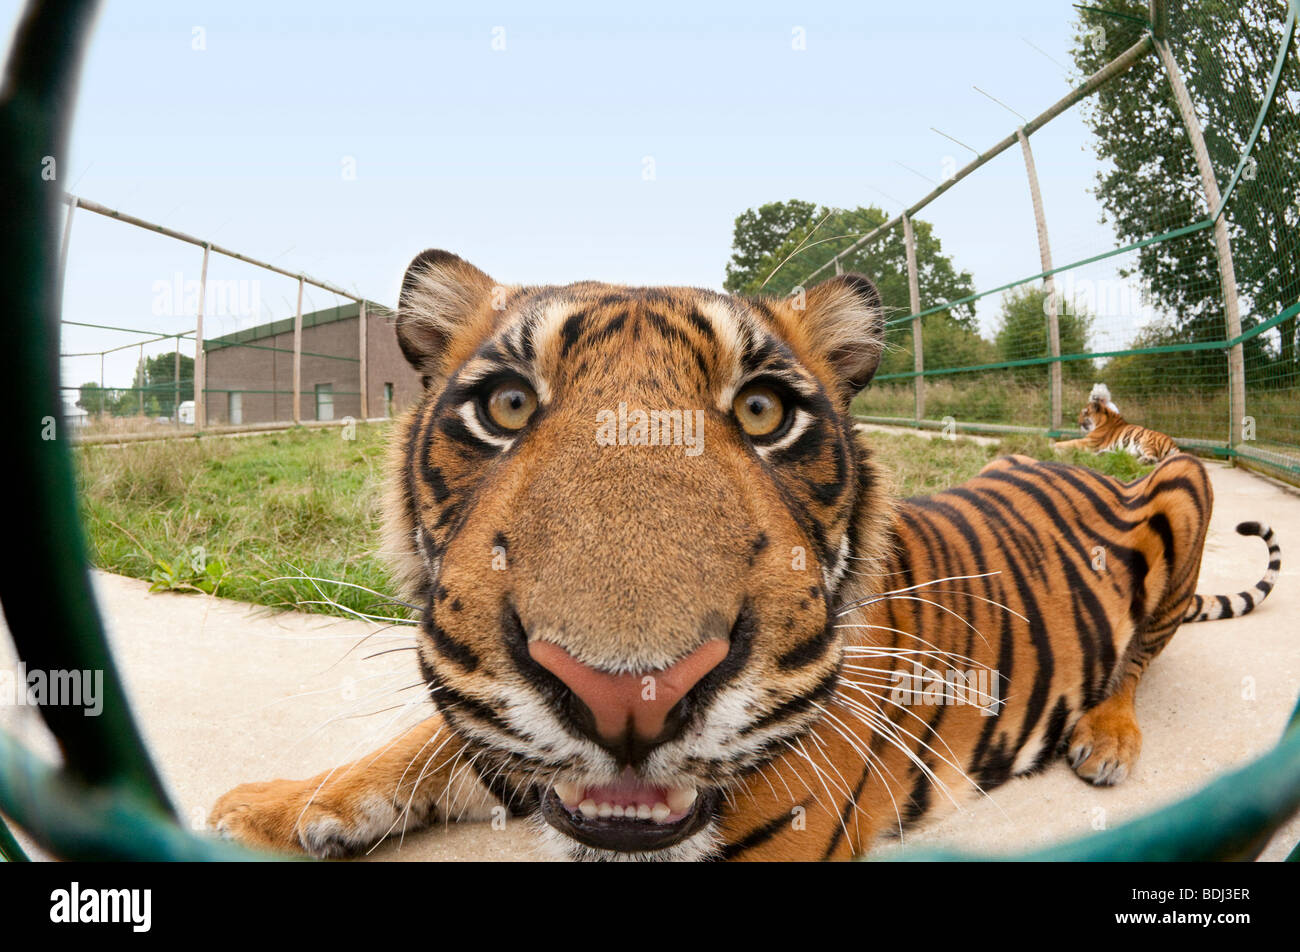 Tiger mit einem fisheye-Objektiv aufgenommen Stockfoto